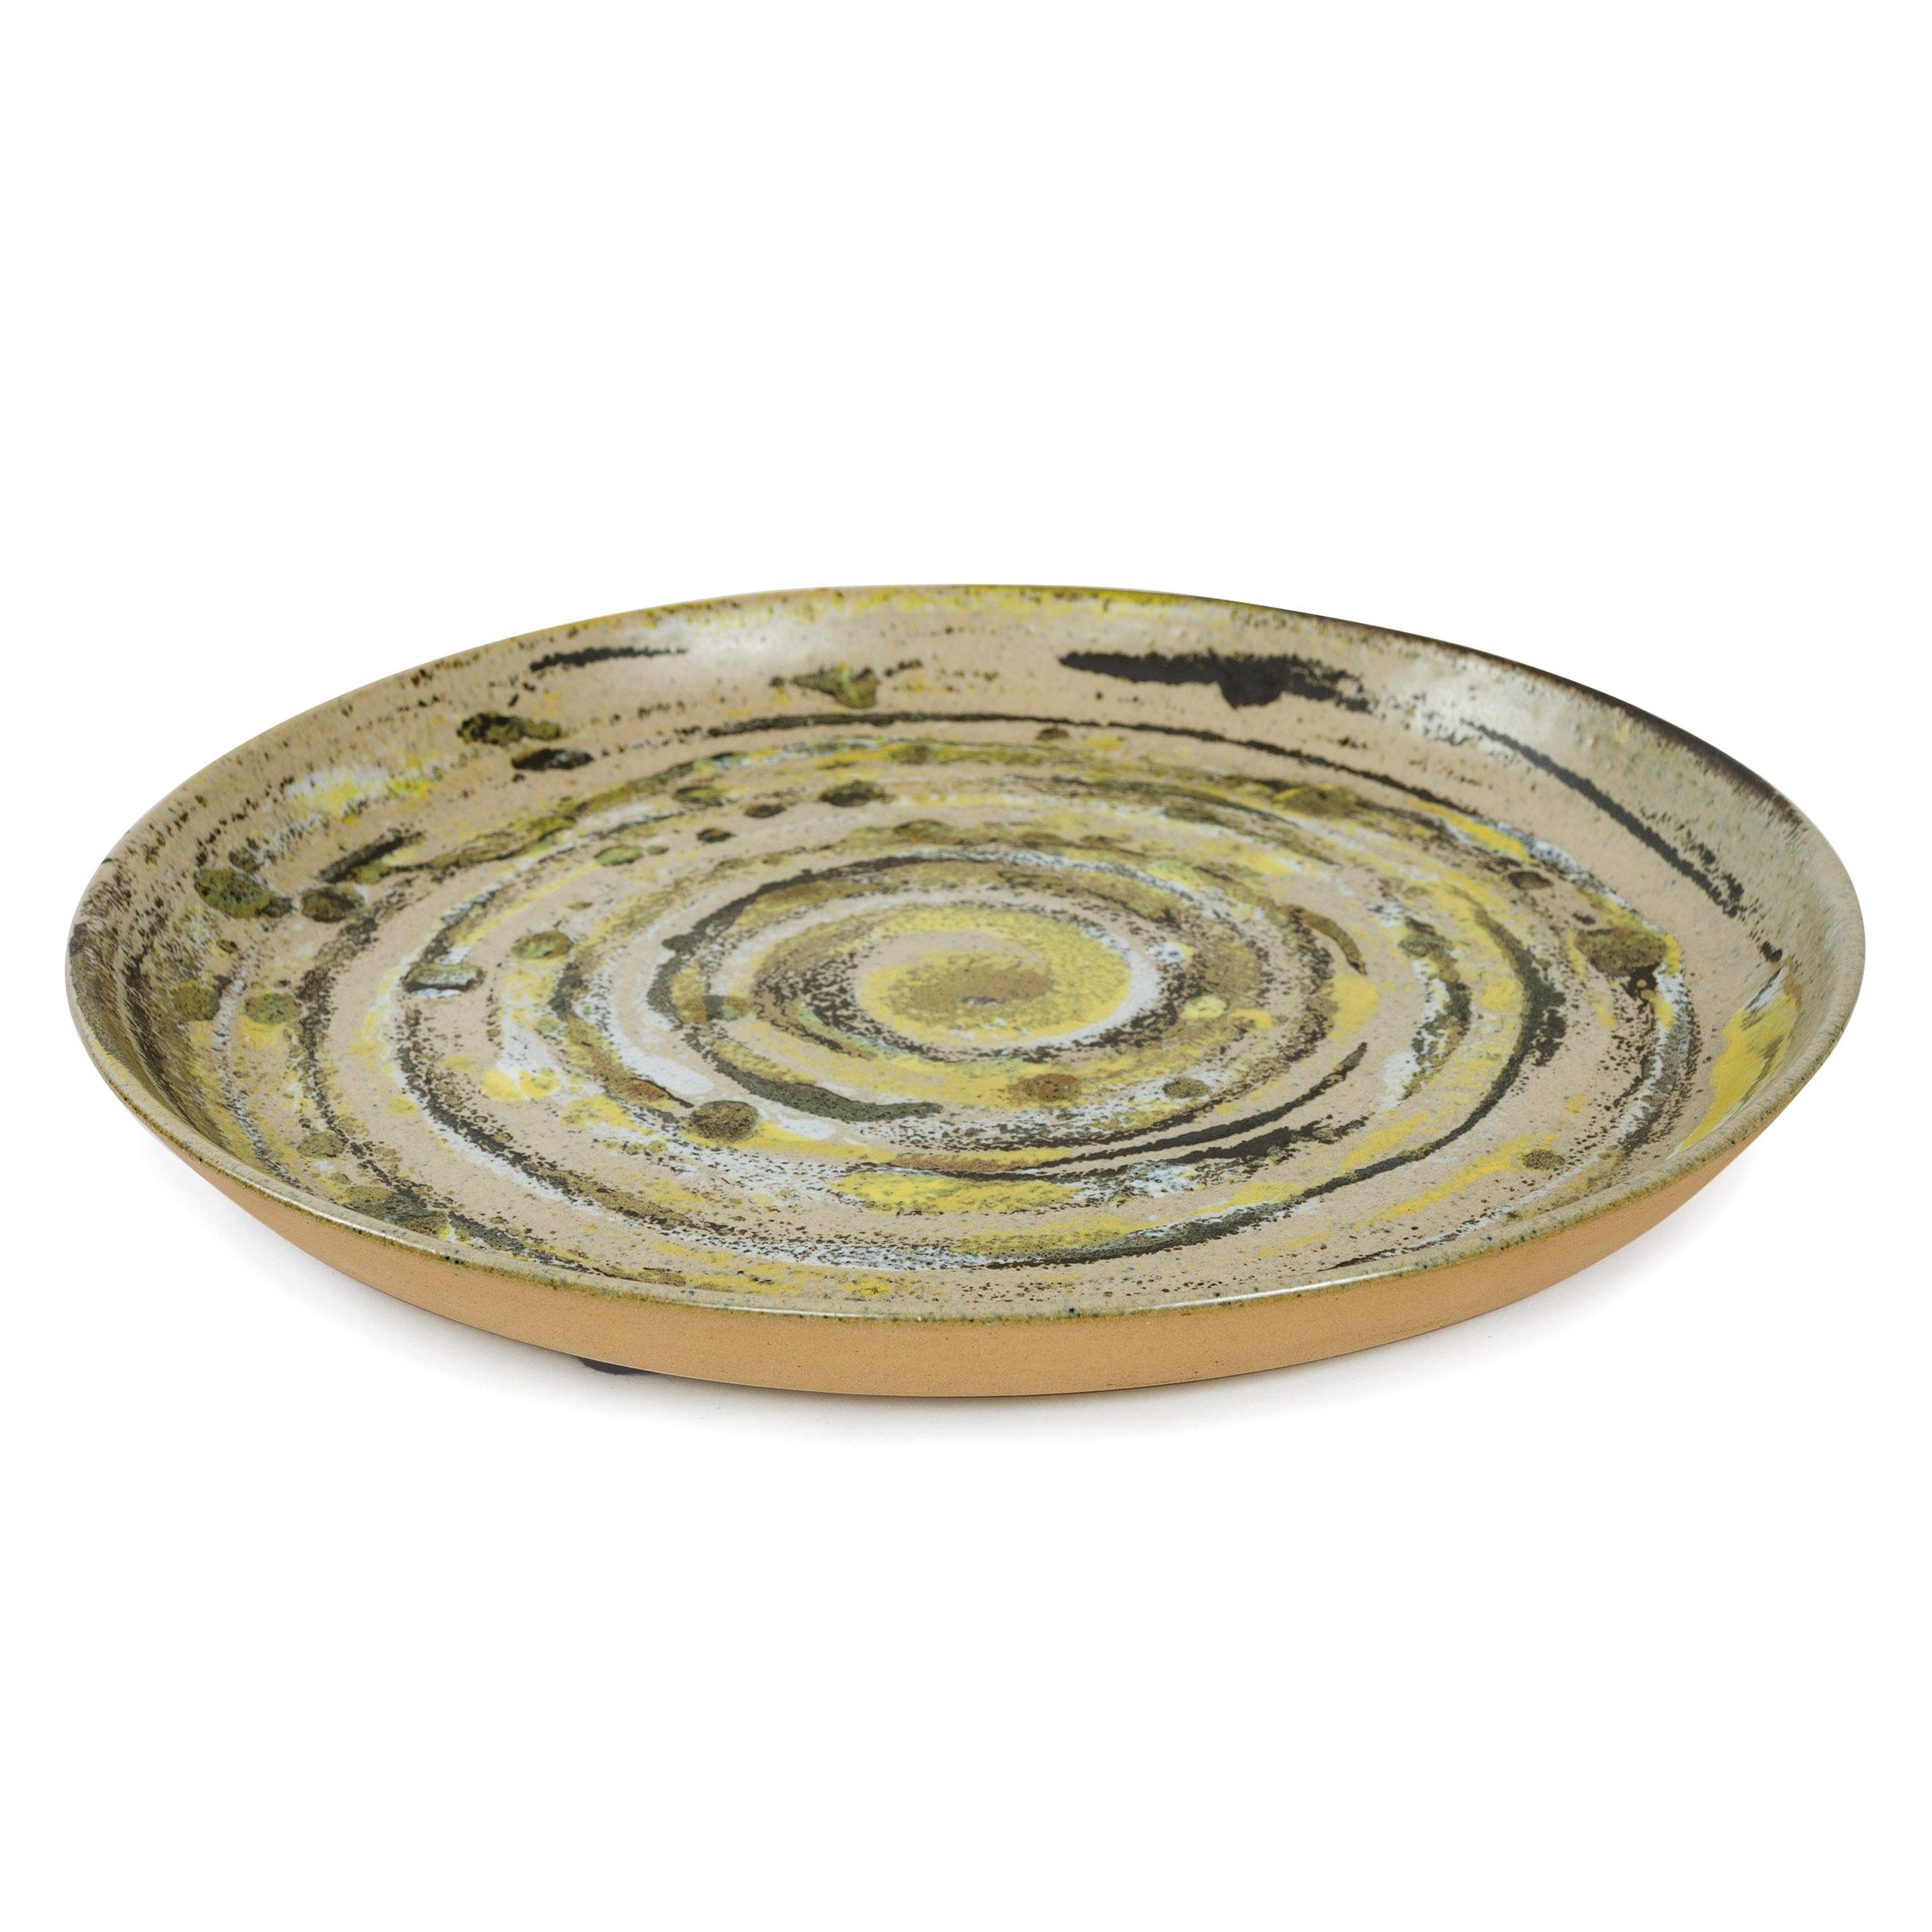 Low walled ceramic bowl in green (29D27) ‘brushed glaze’ circular pattern.